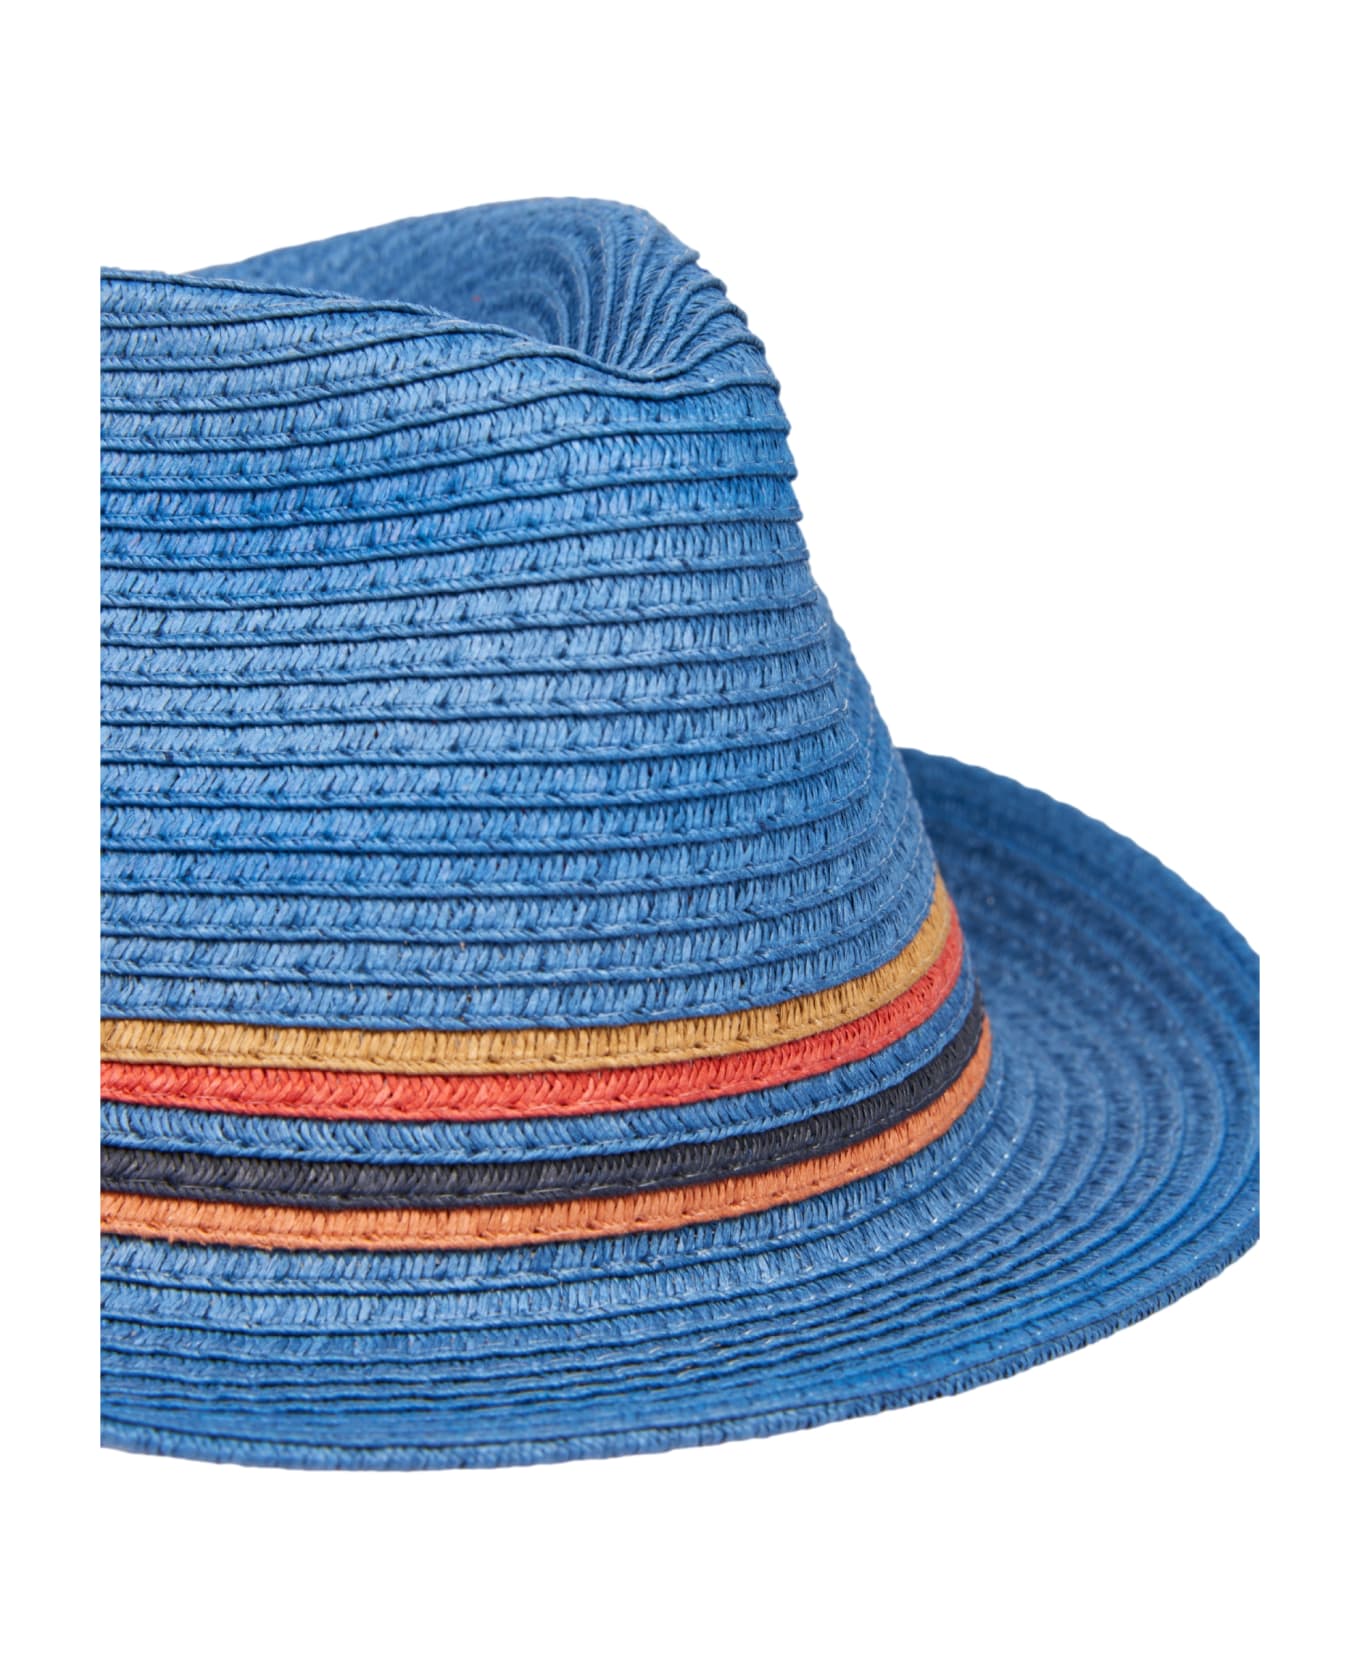 Paul Smith Hat - Blue 帽子